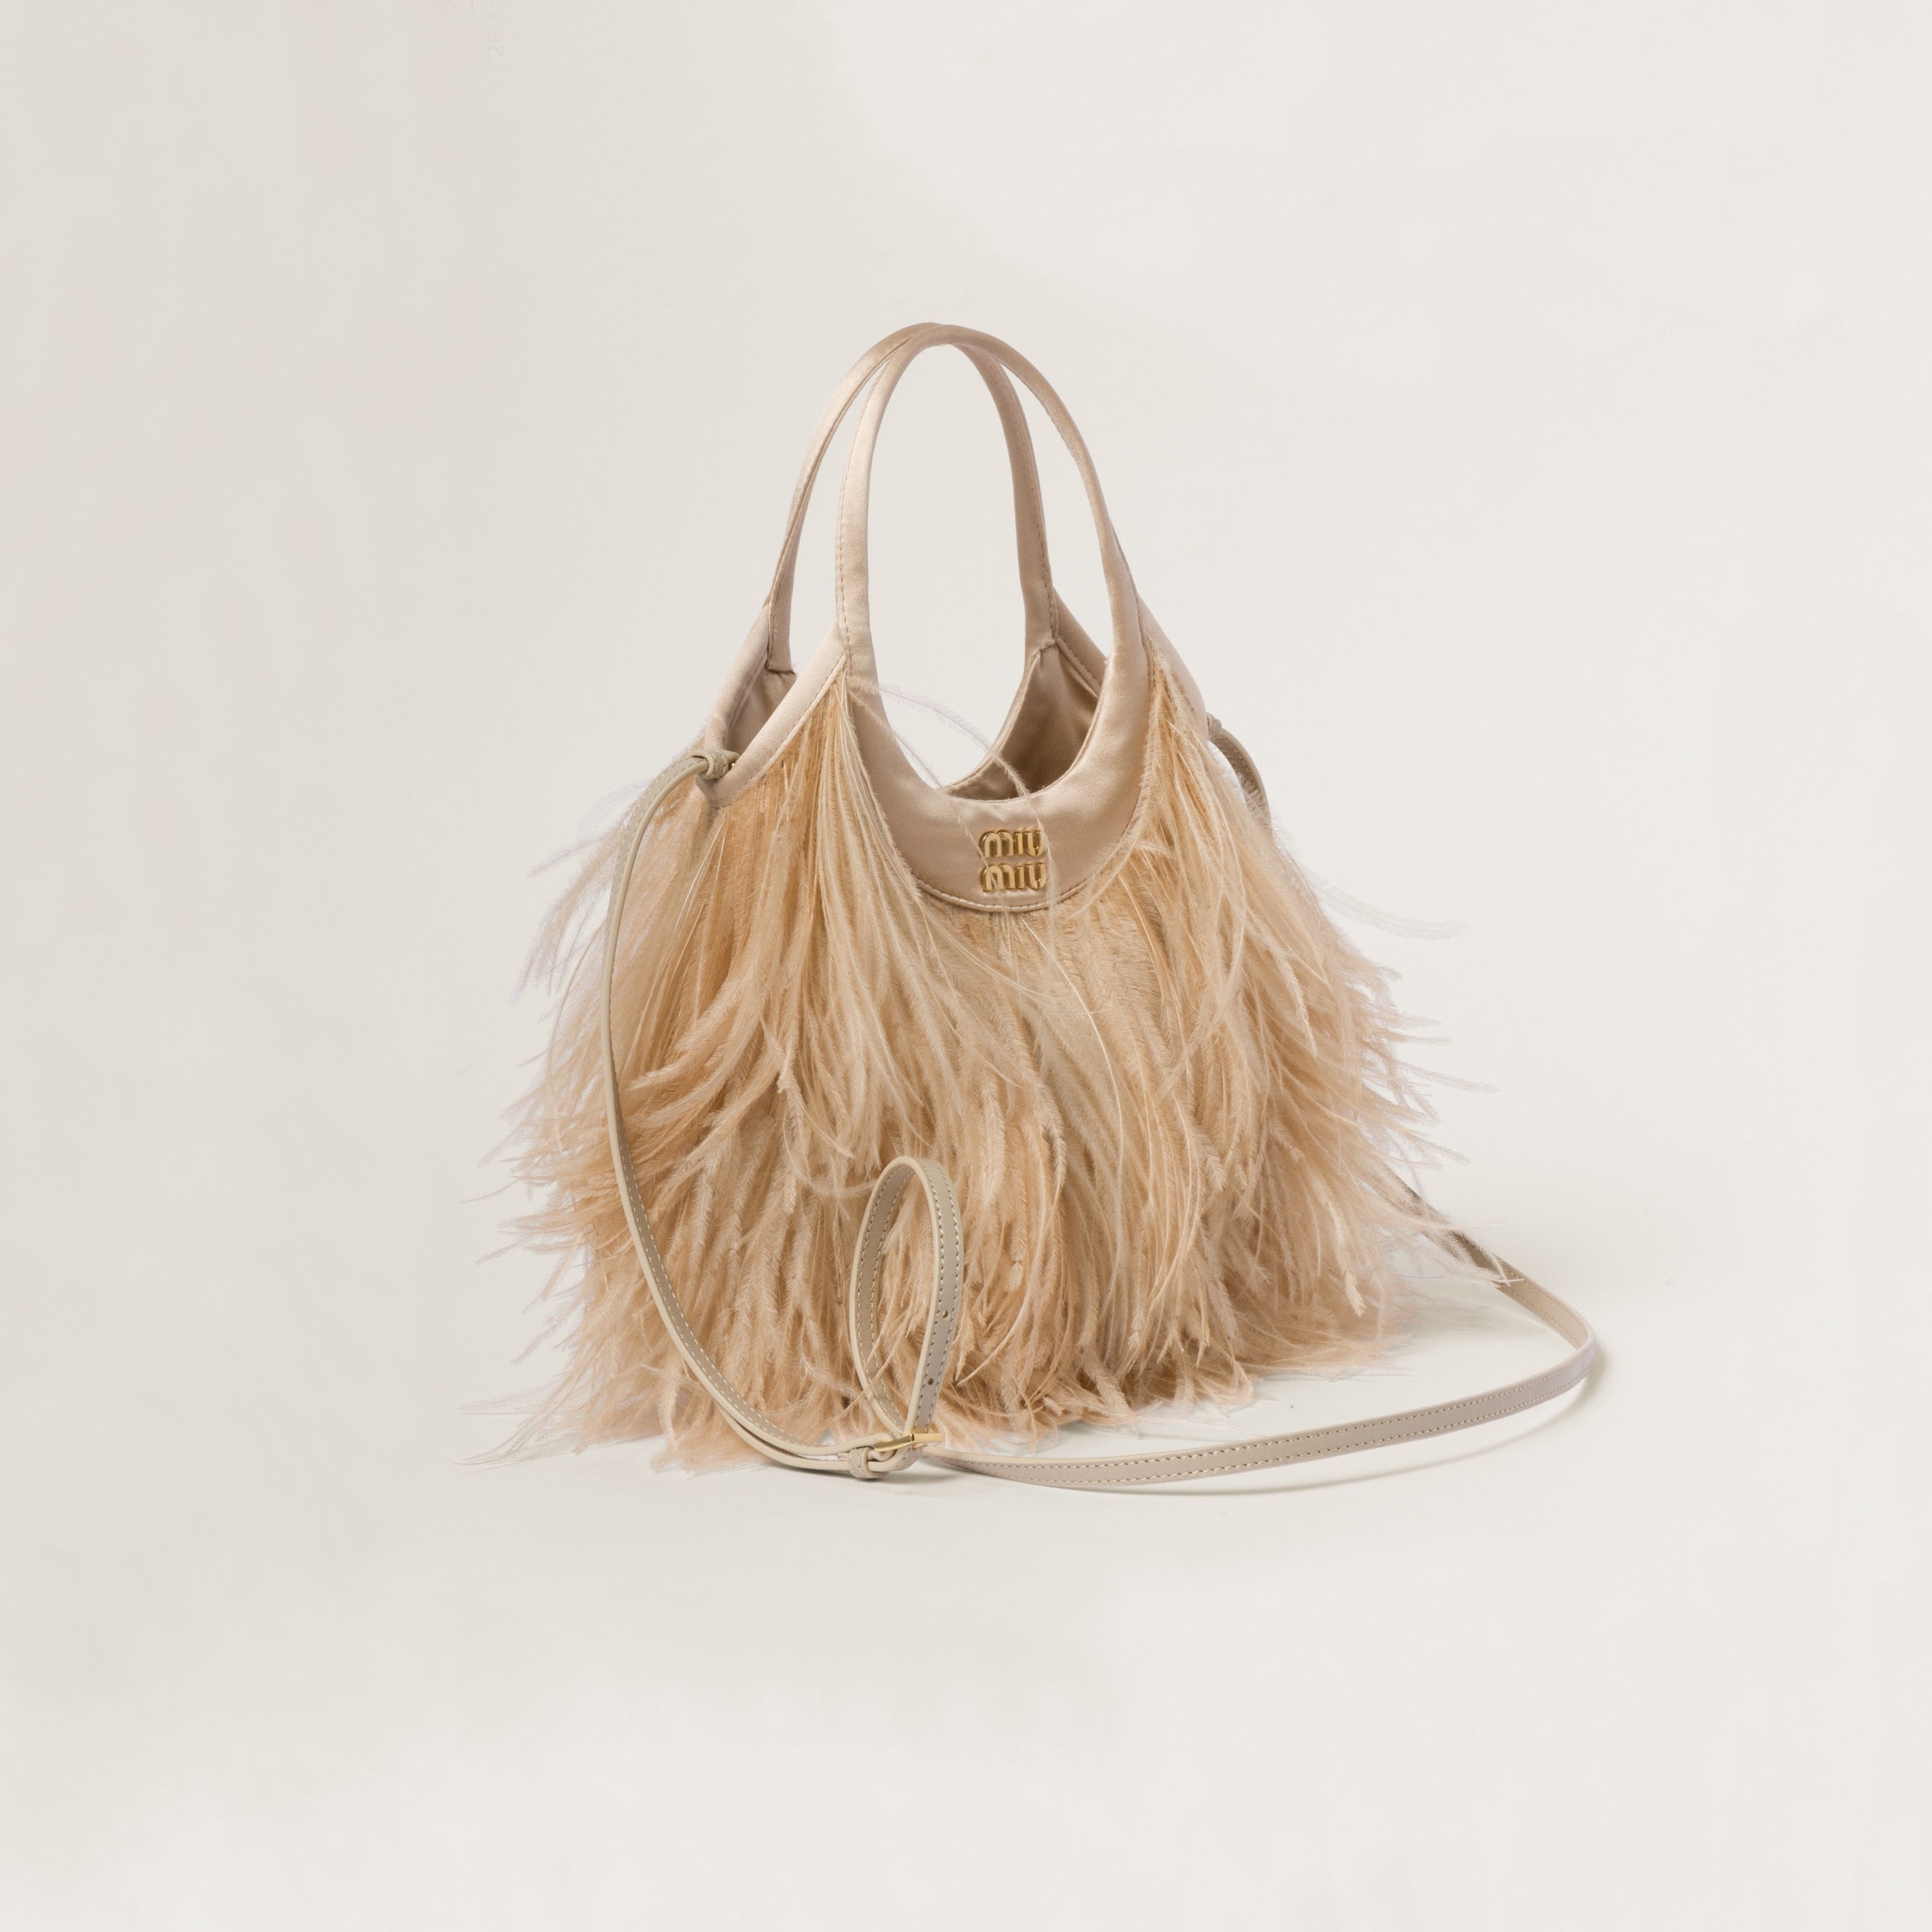 Satin handbag with feathers - 2